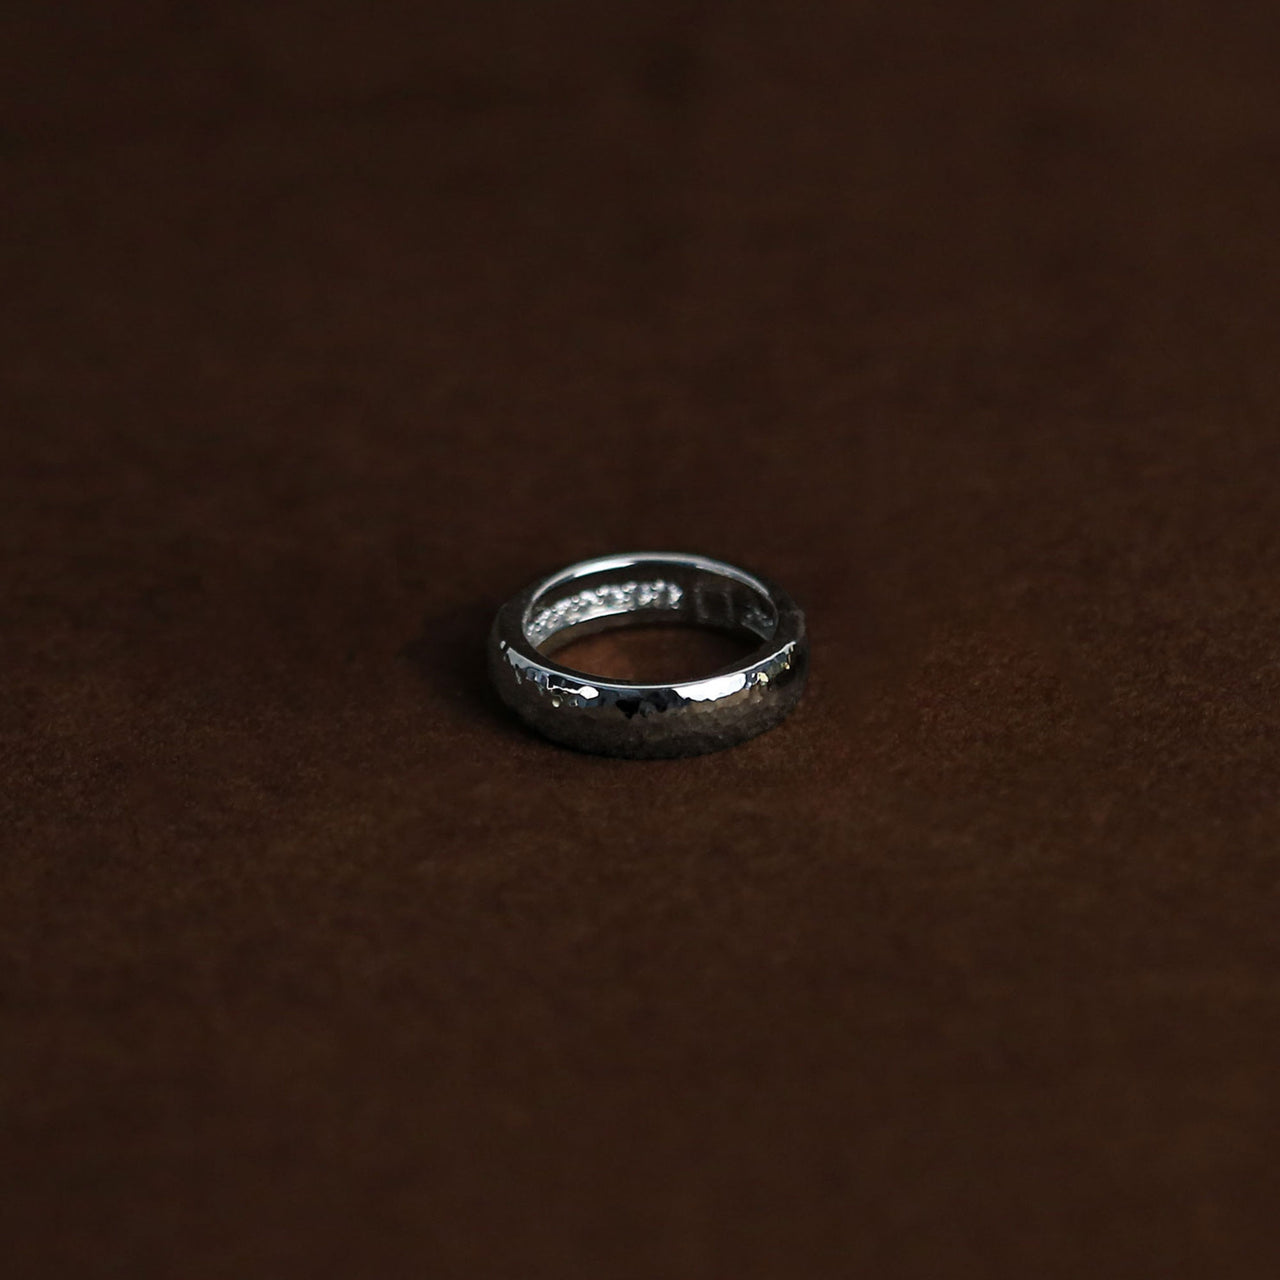 The Forbidden ring